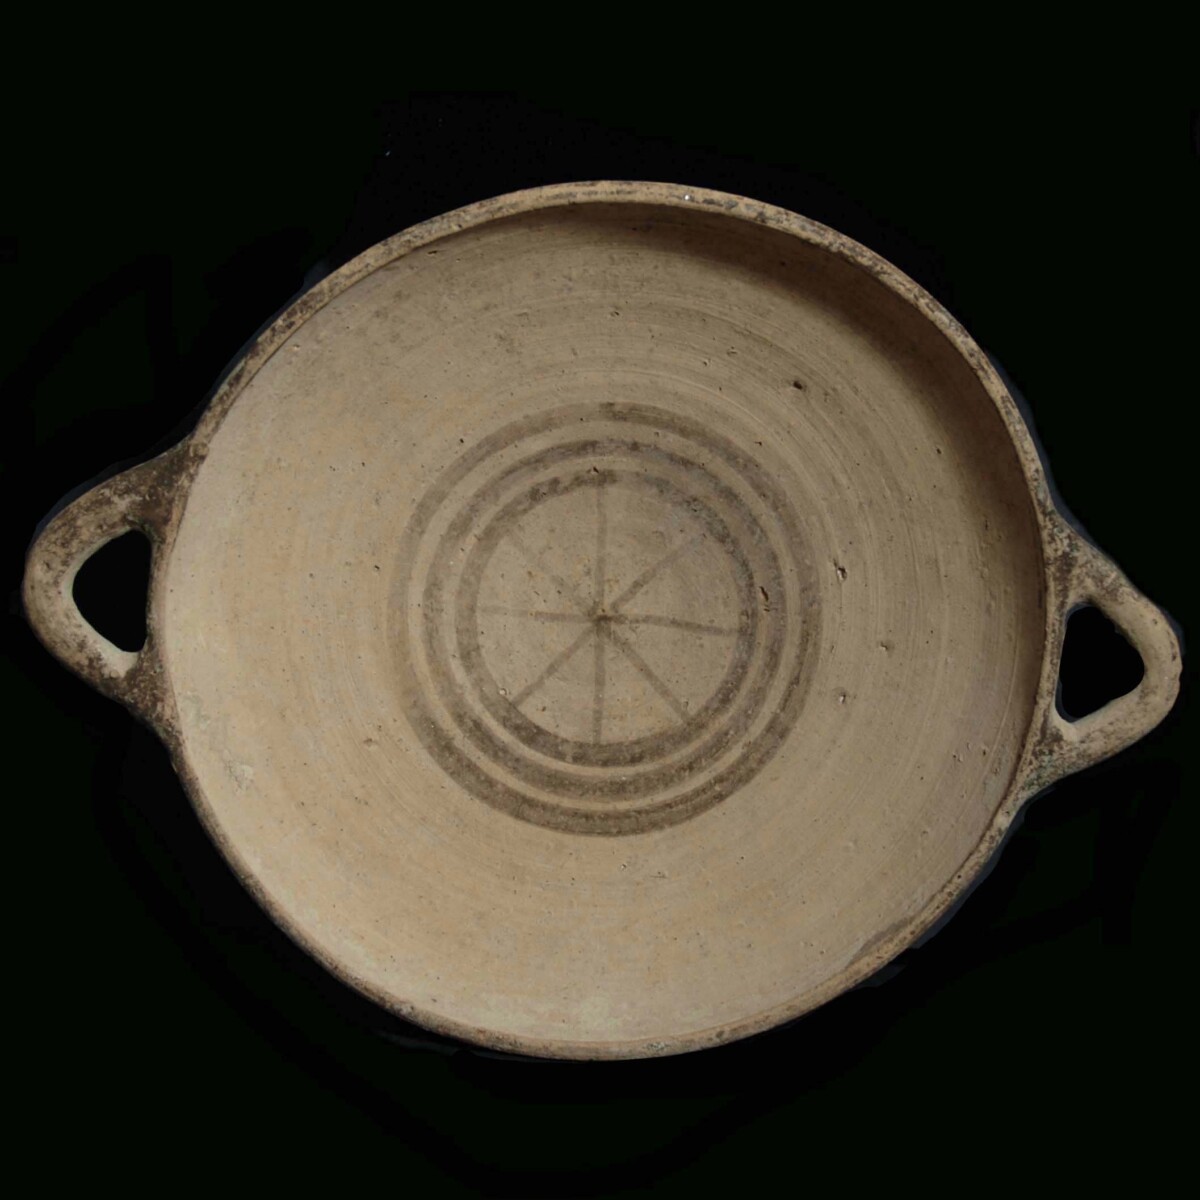 Cypriot Bichrome Ware bowl inside